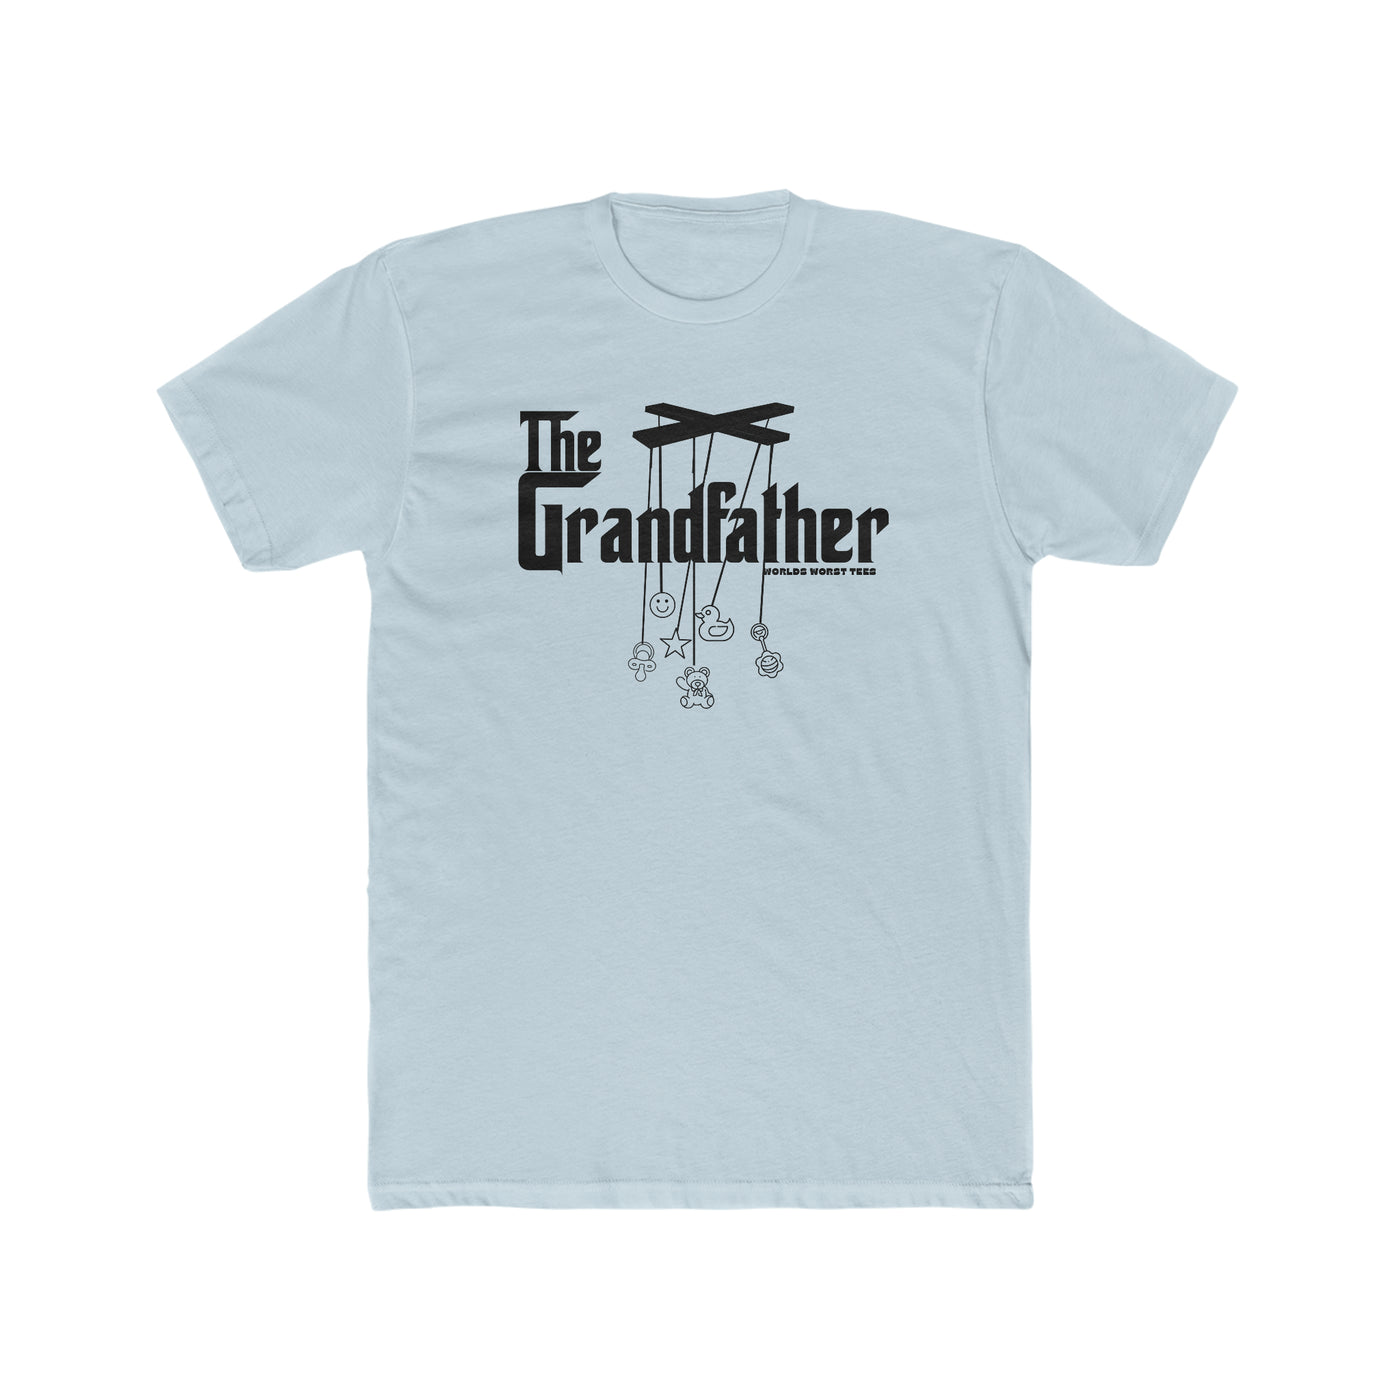 The Grandfather Tee